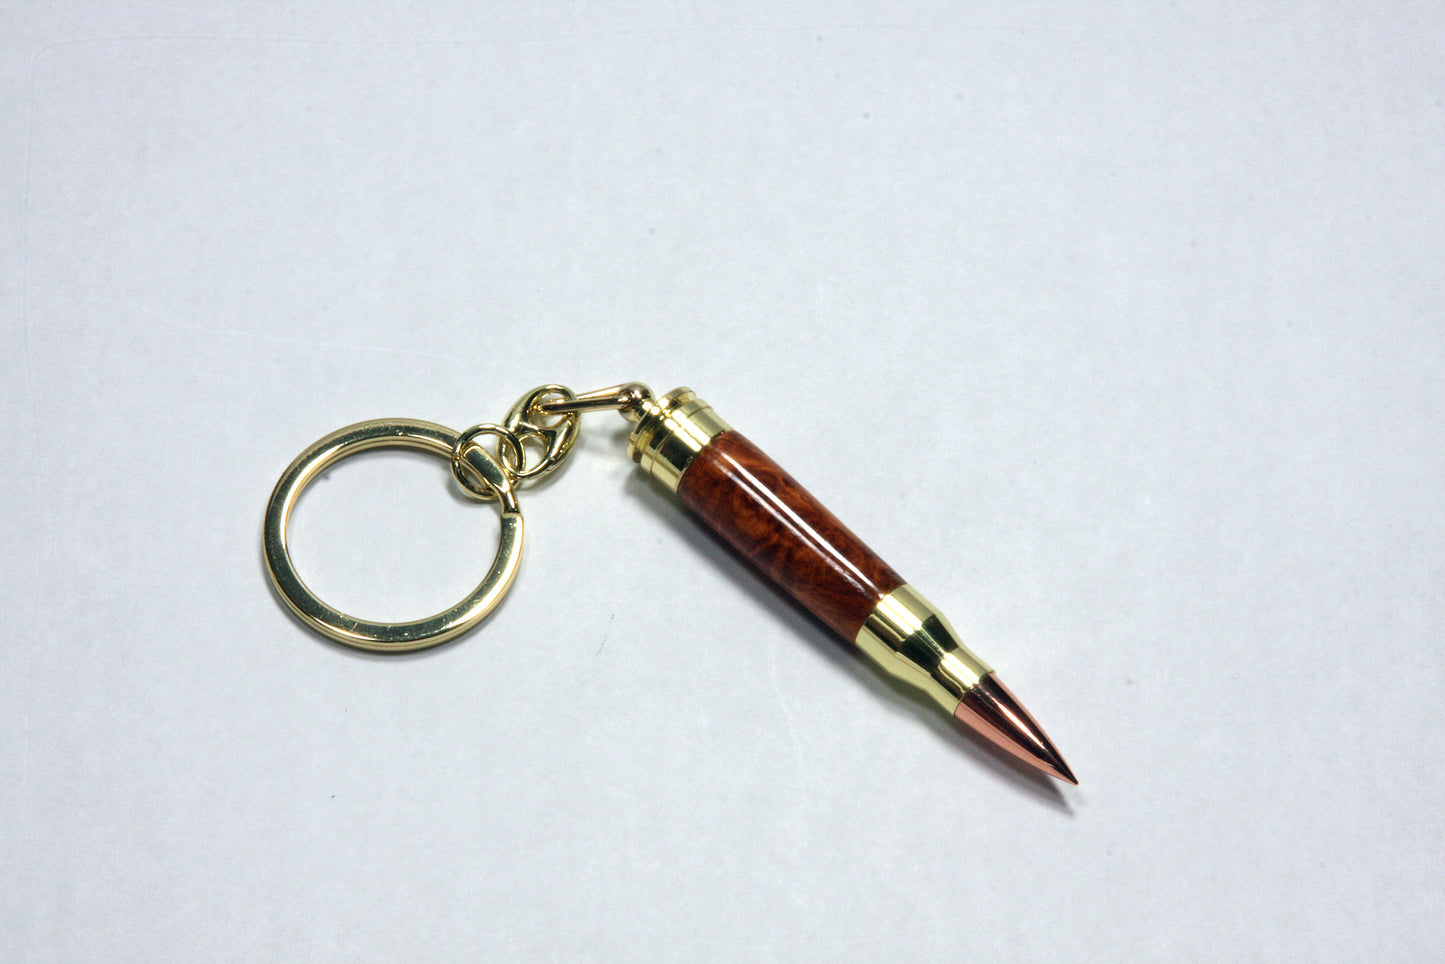 Handcrafted Mini Cartridge Keychain - Gold Plated with Amboyna Burl Wood Barrel